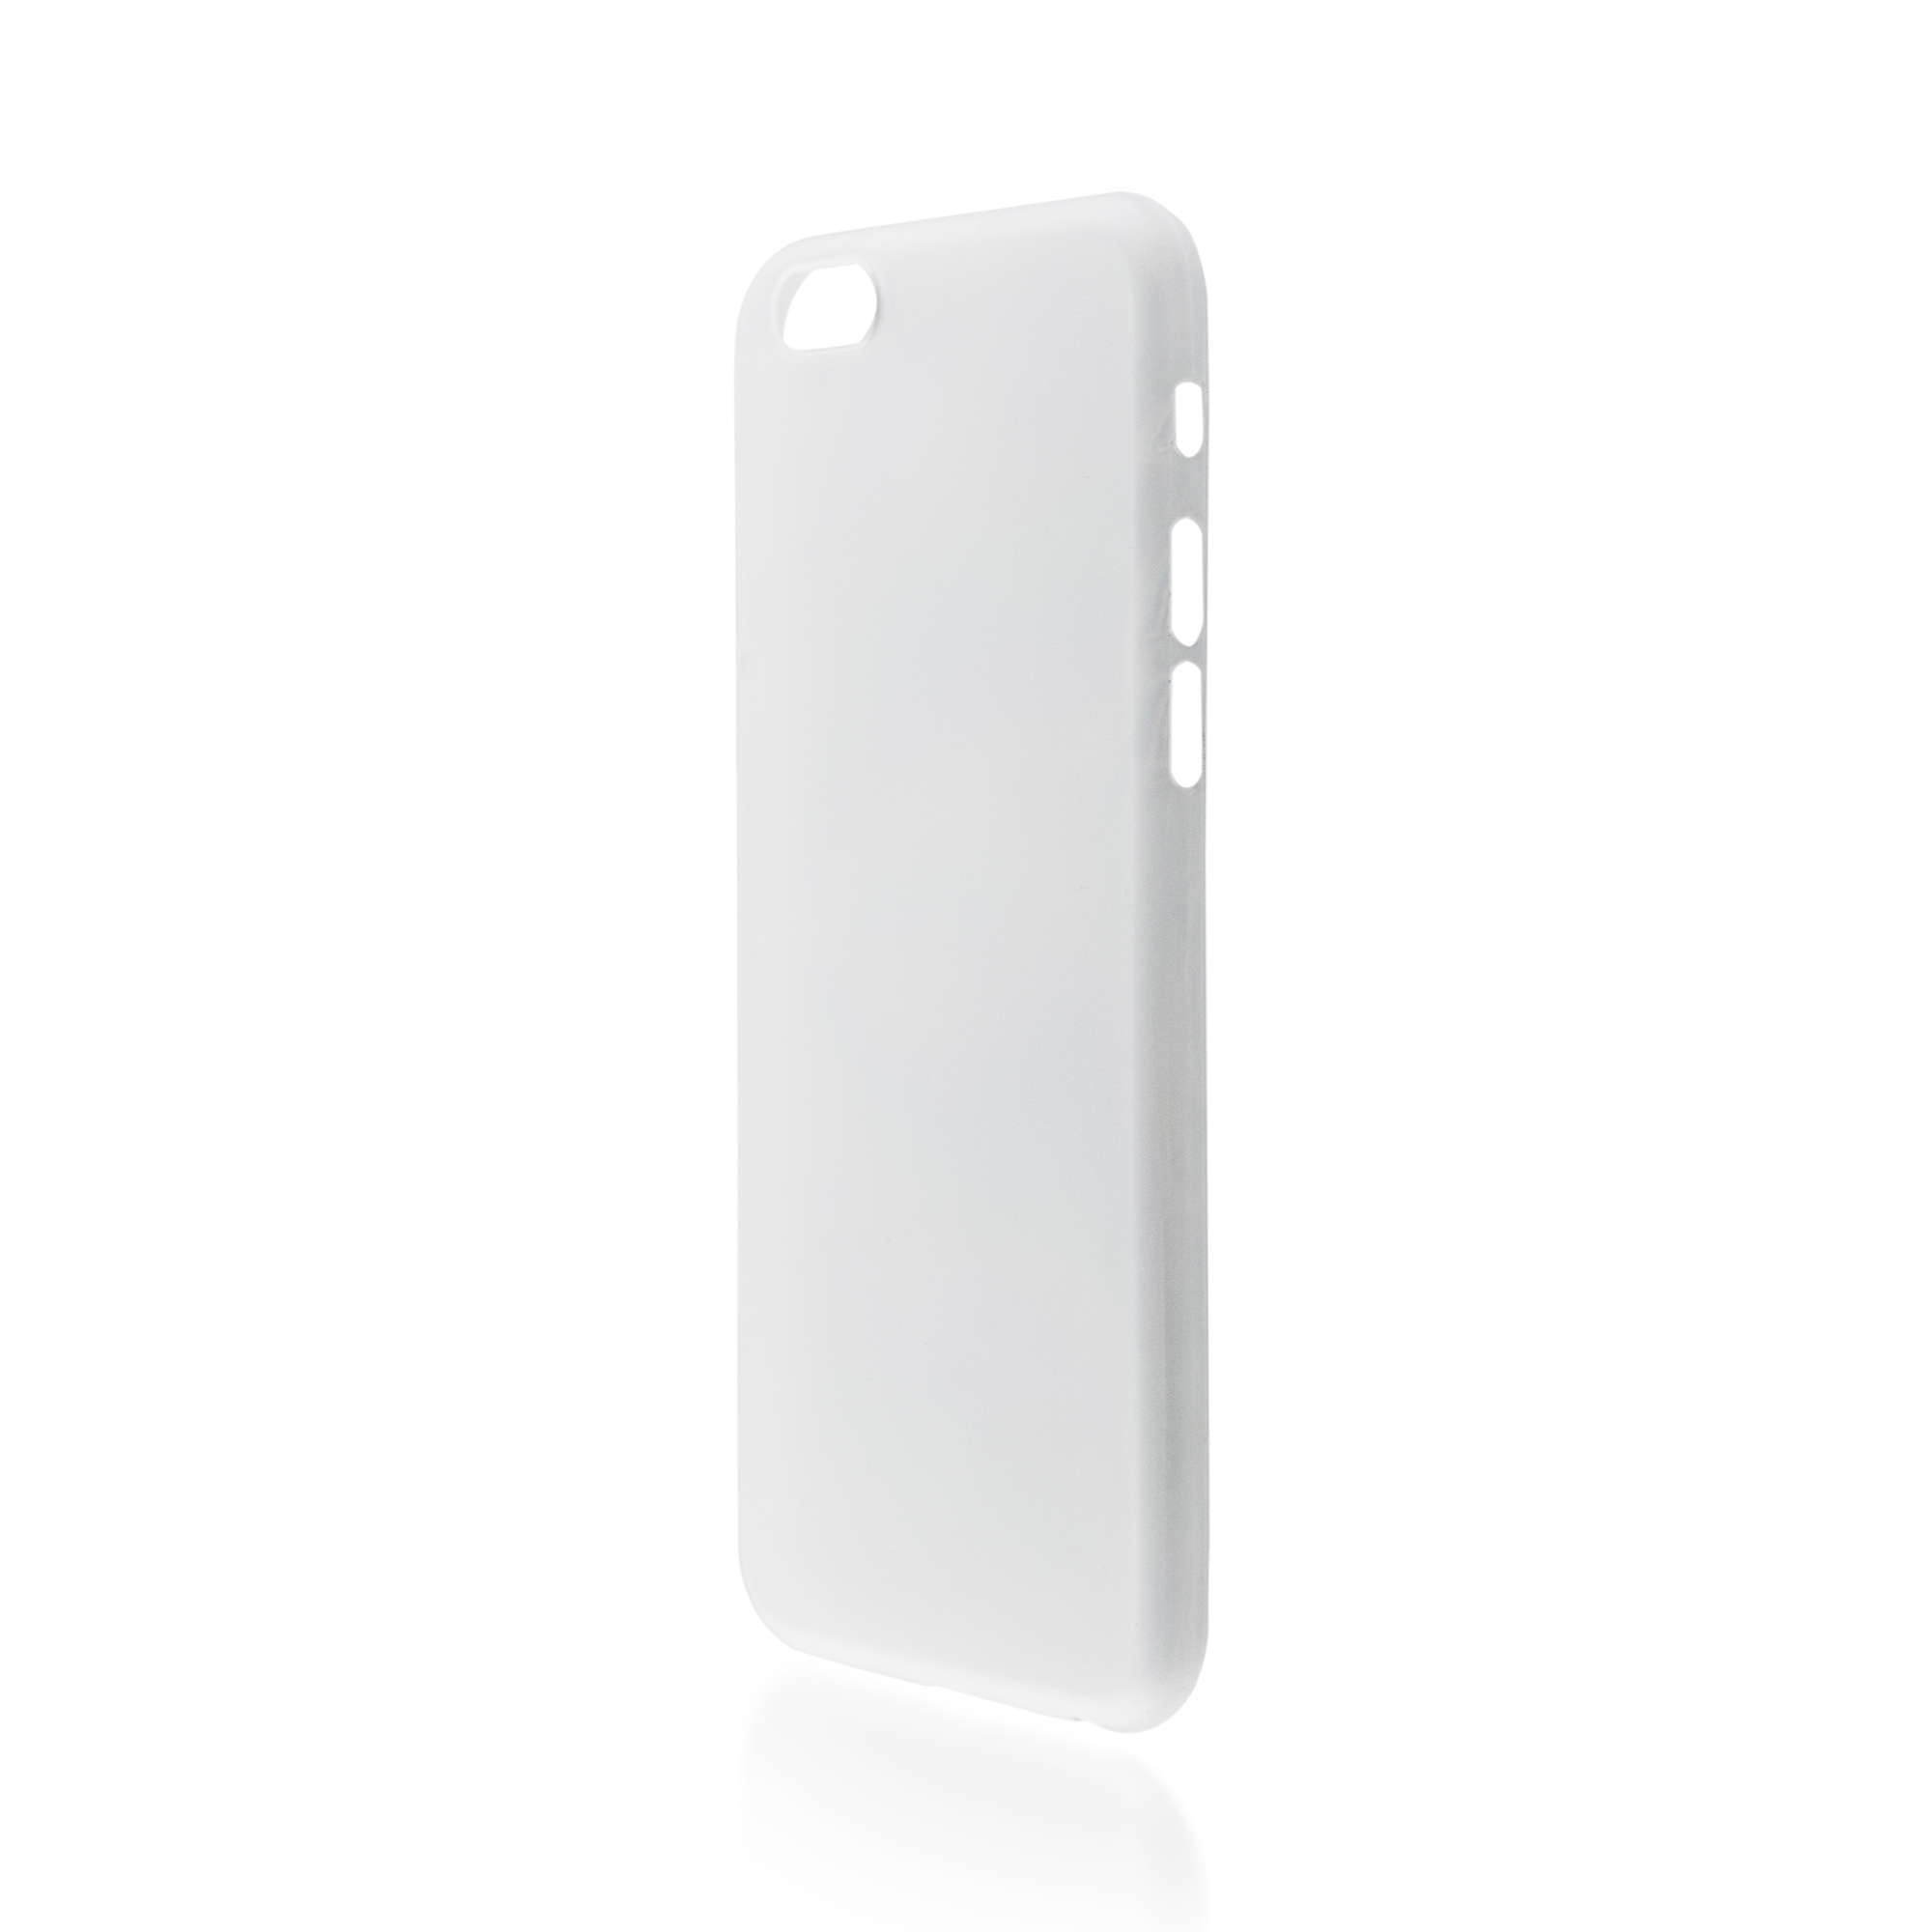 Чехол-накладка BROSCO SuperSlim для смартфона Apple iPhone 6, пластик, белый (IP6-PP-SUPERSLIM-WHITE)